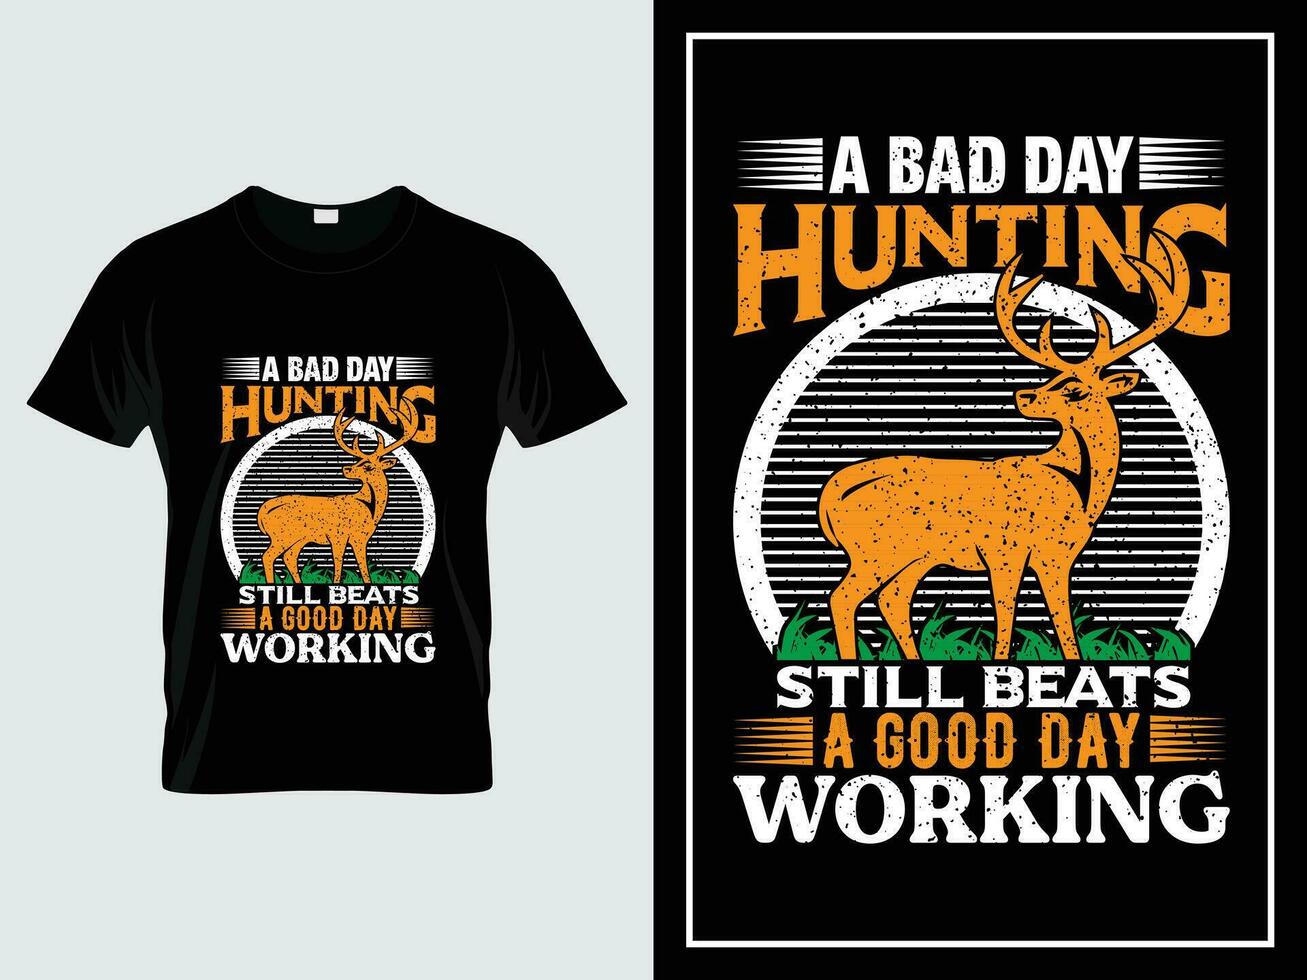 Custom hunting t-shirt design vintage style, hunting typography t-shirt vector